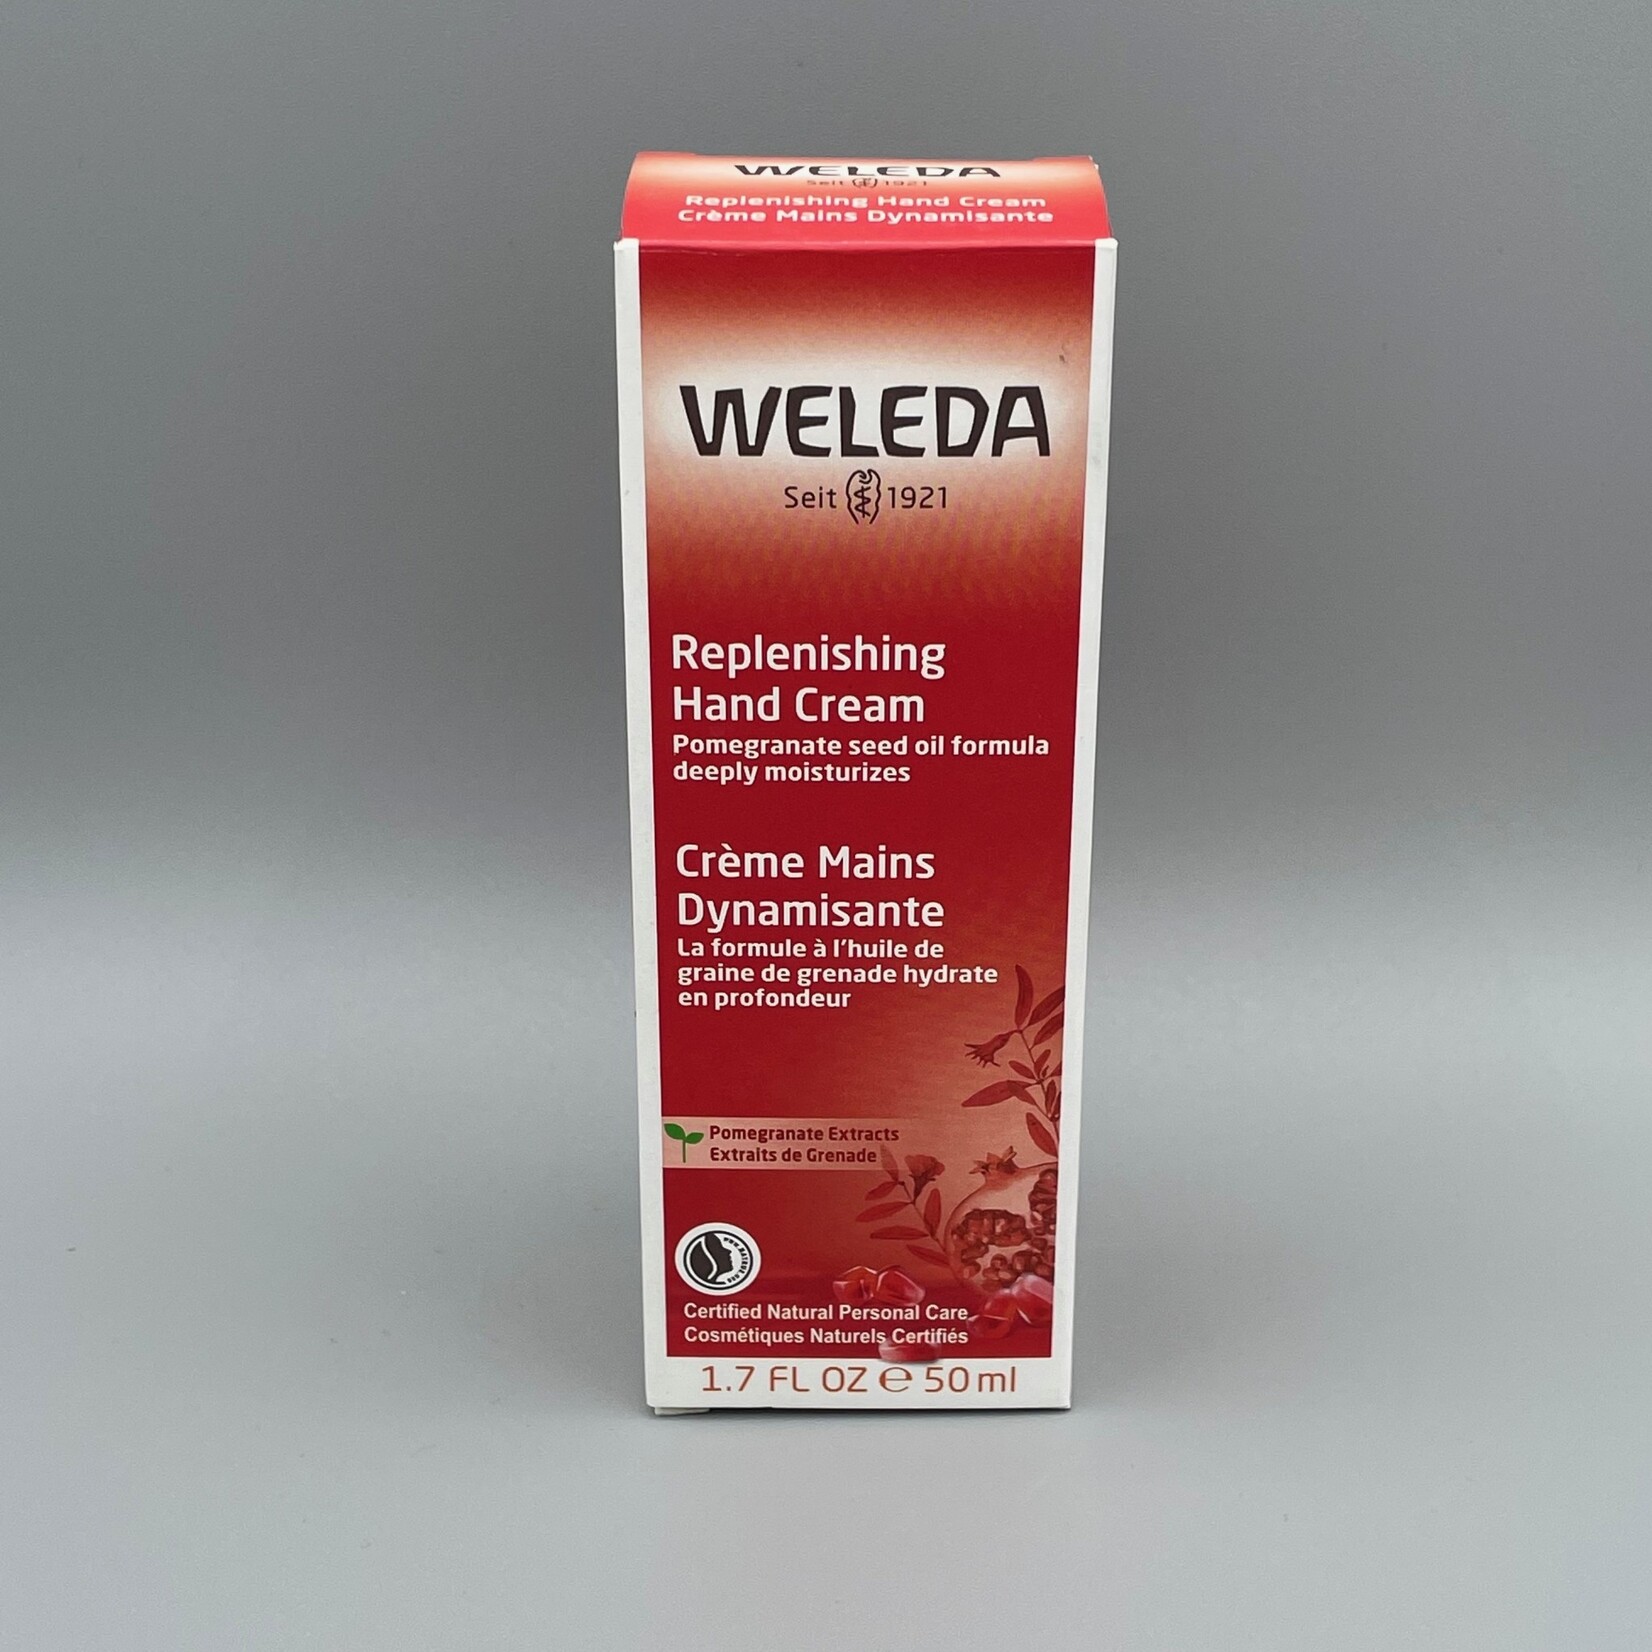 Weleda: Replenishing Hand Cream - Pomegranate, 1.7 FL OZ